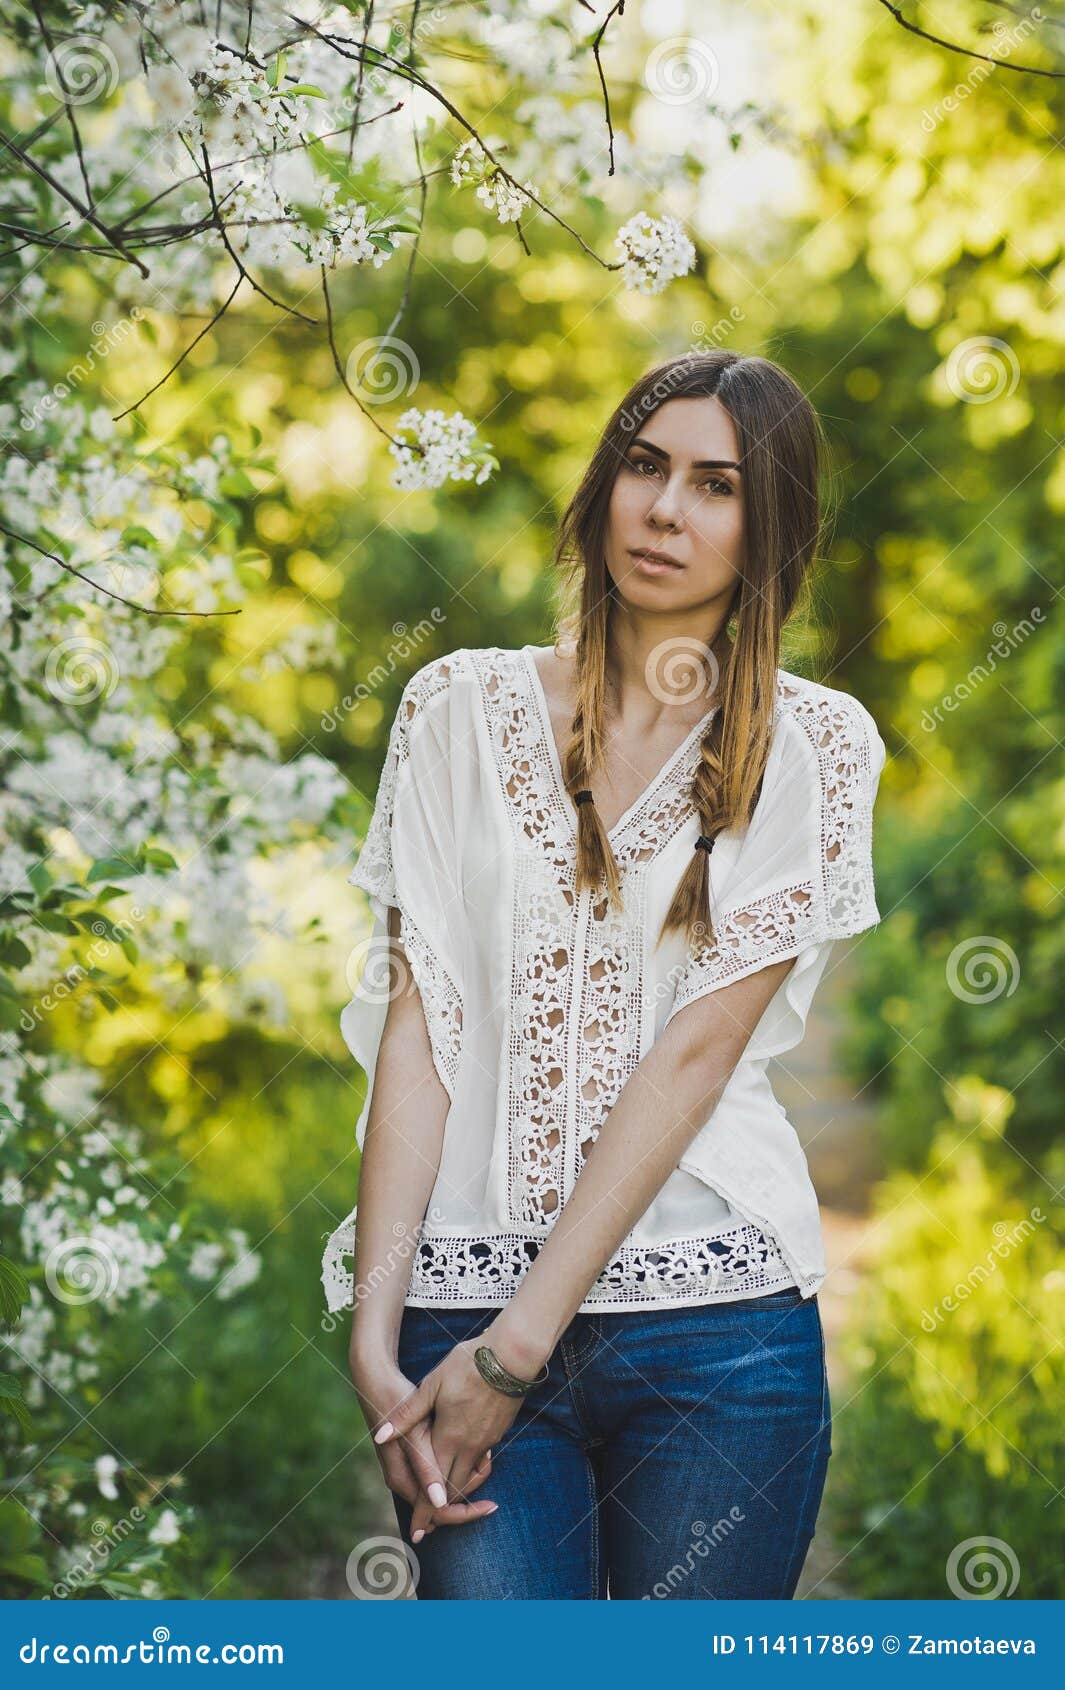 Girl in White Blouse Walking through the Garden 6103. Stock Image ...